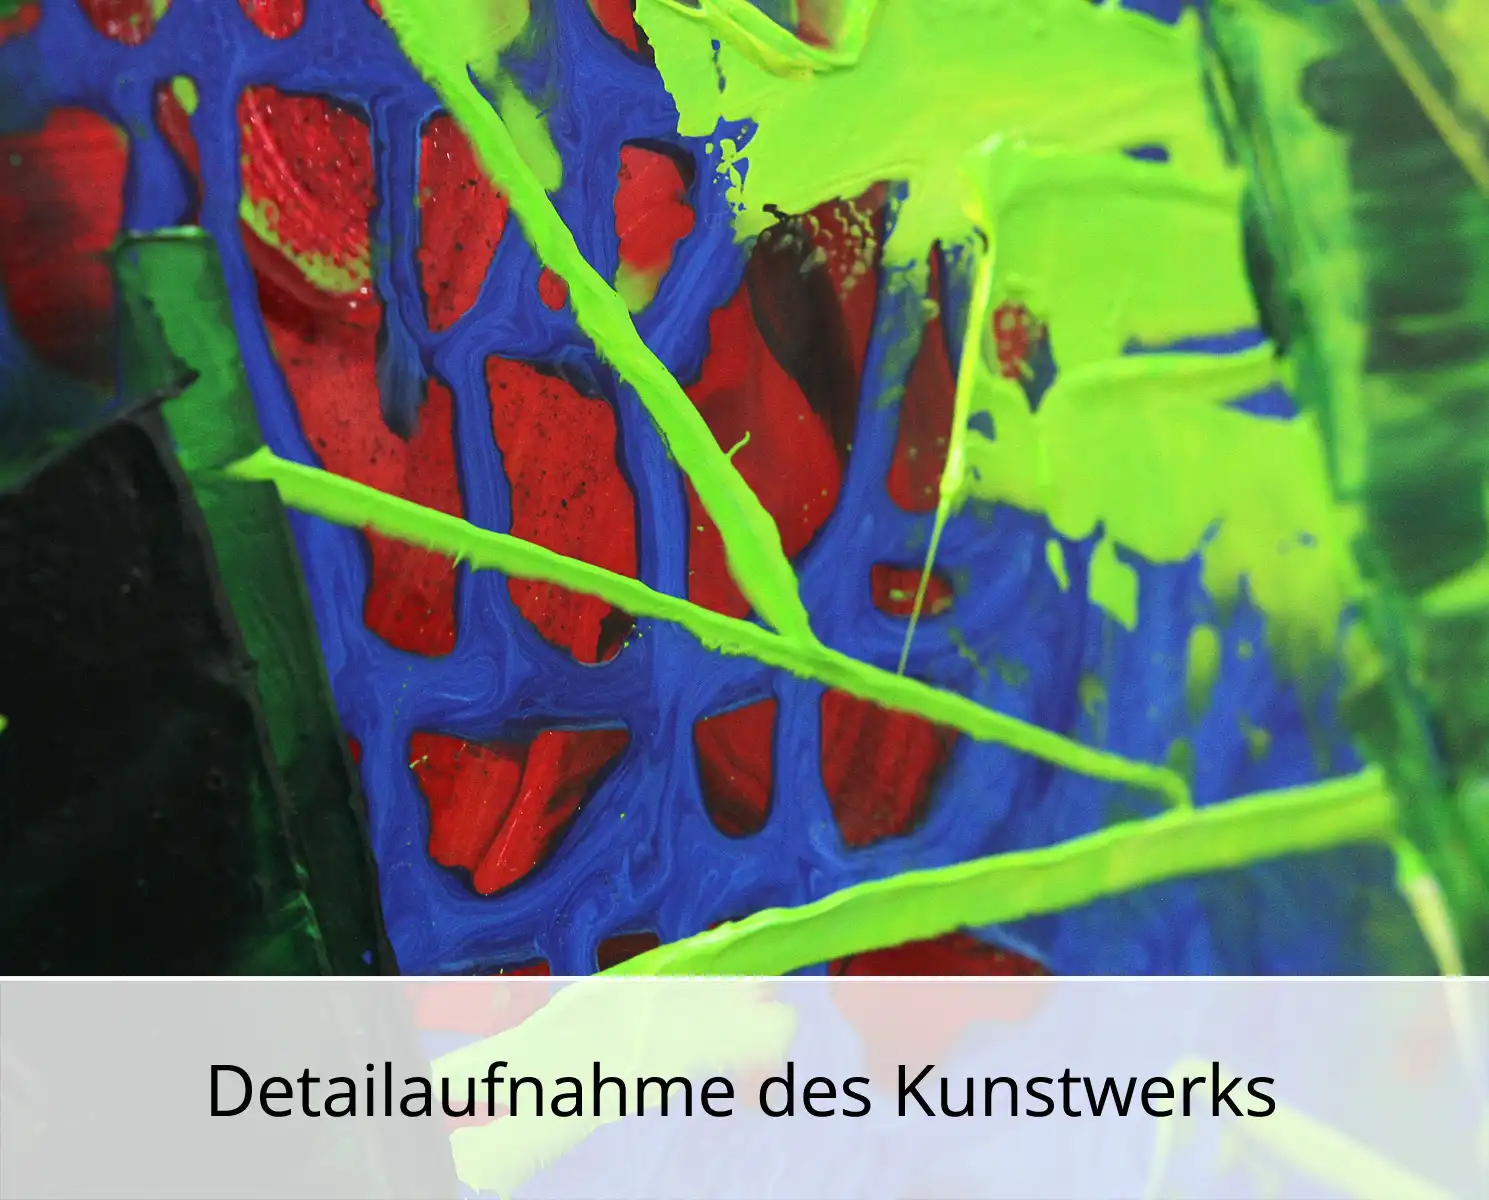 Abstraktes Originalgemälde: "Kryptische Dynamik II, R. König, Unikat